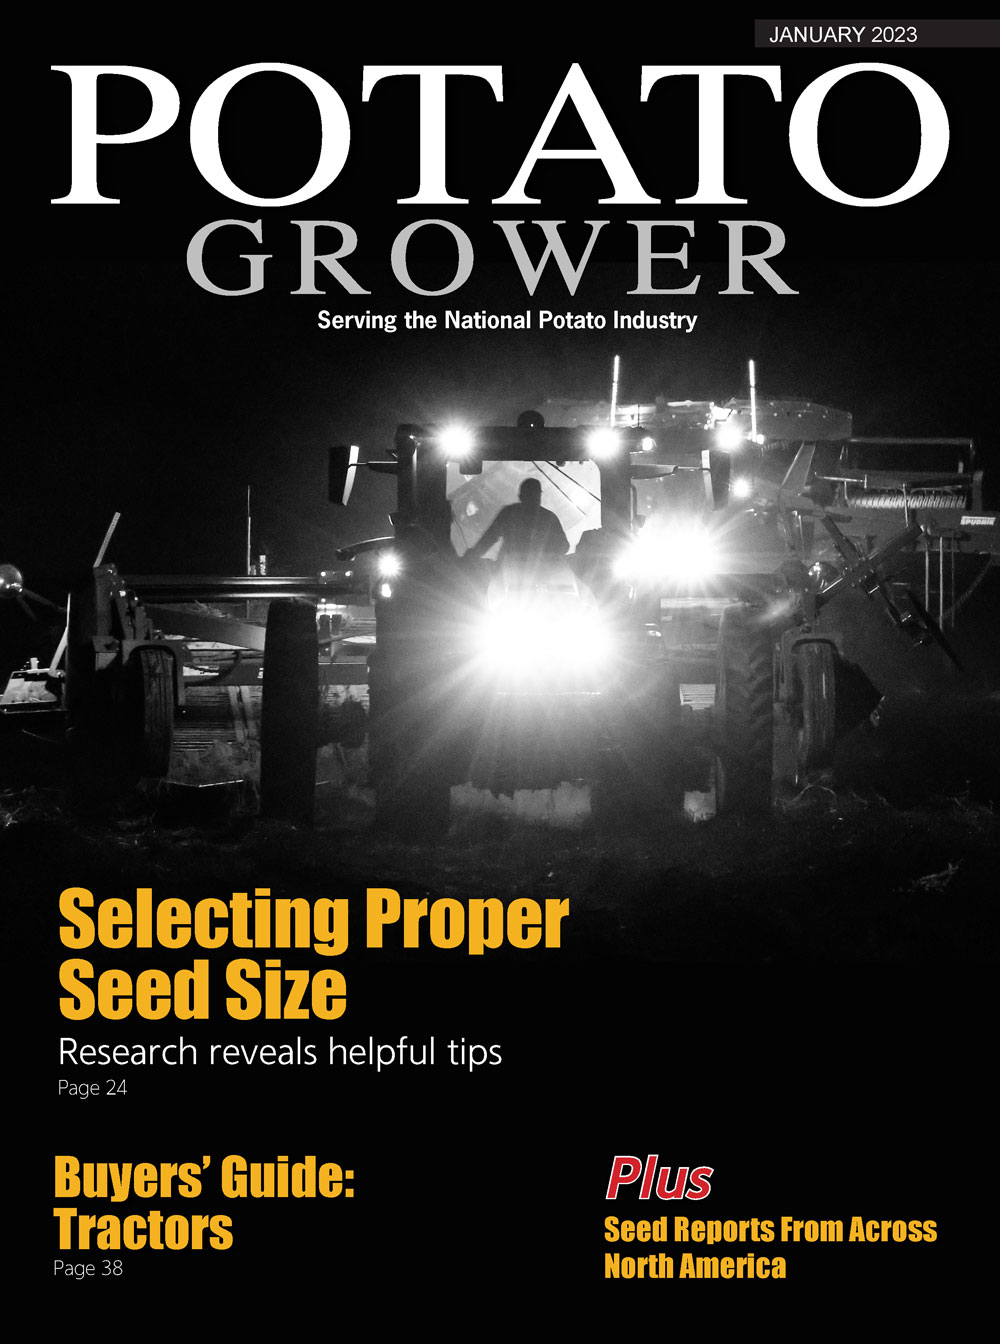 Potato Grower January 2023 cover